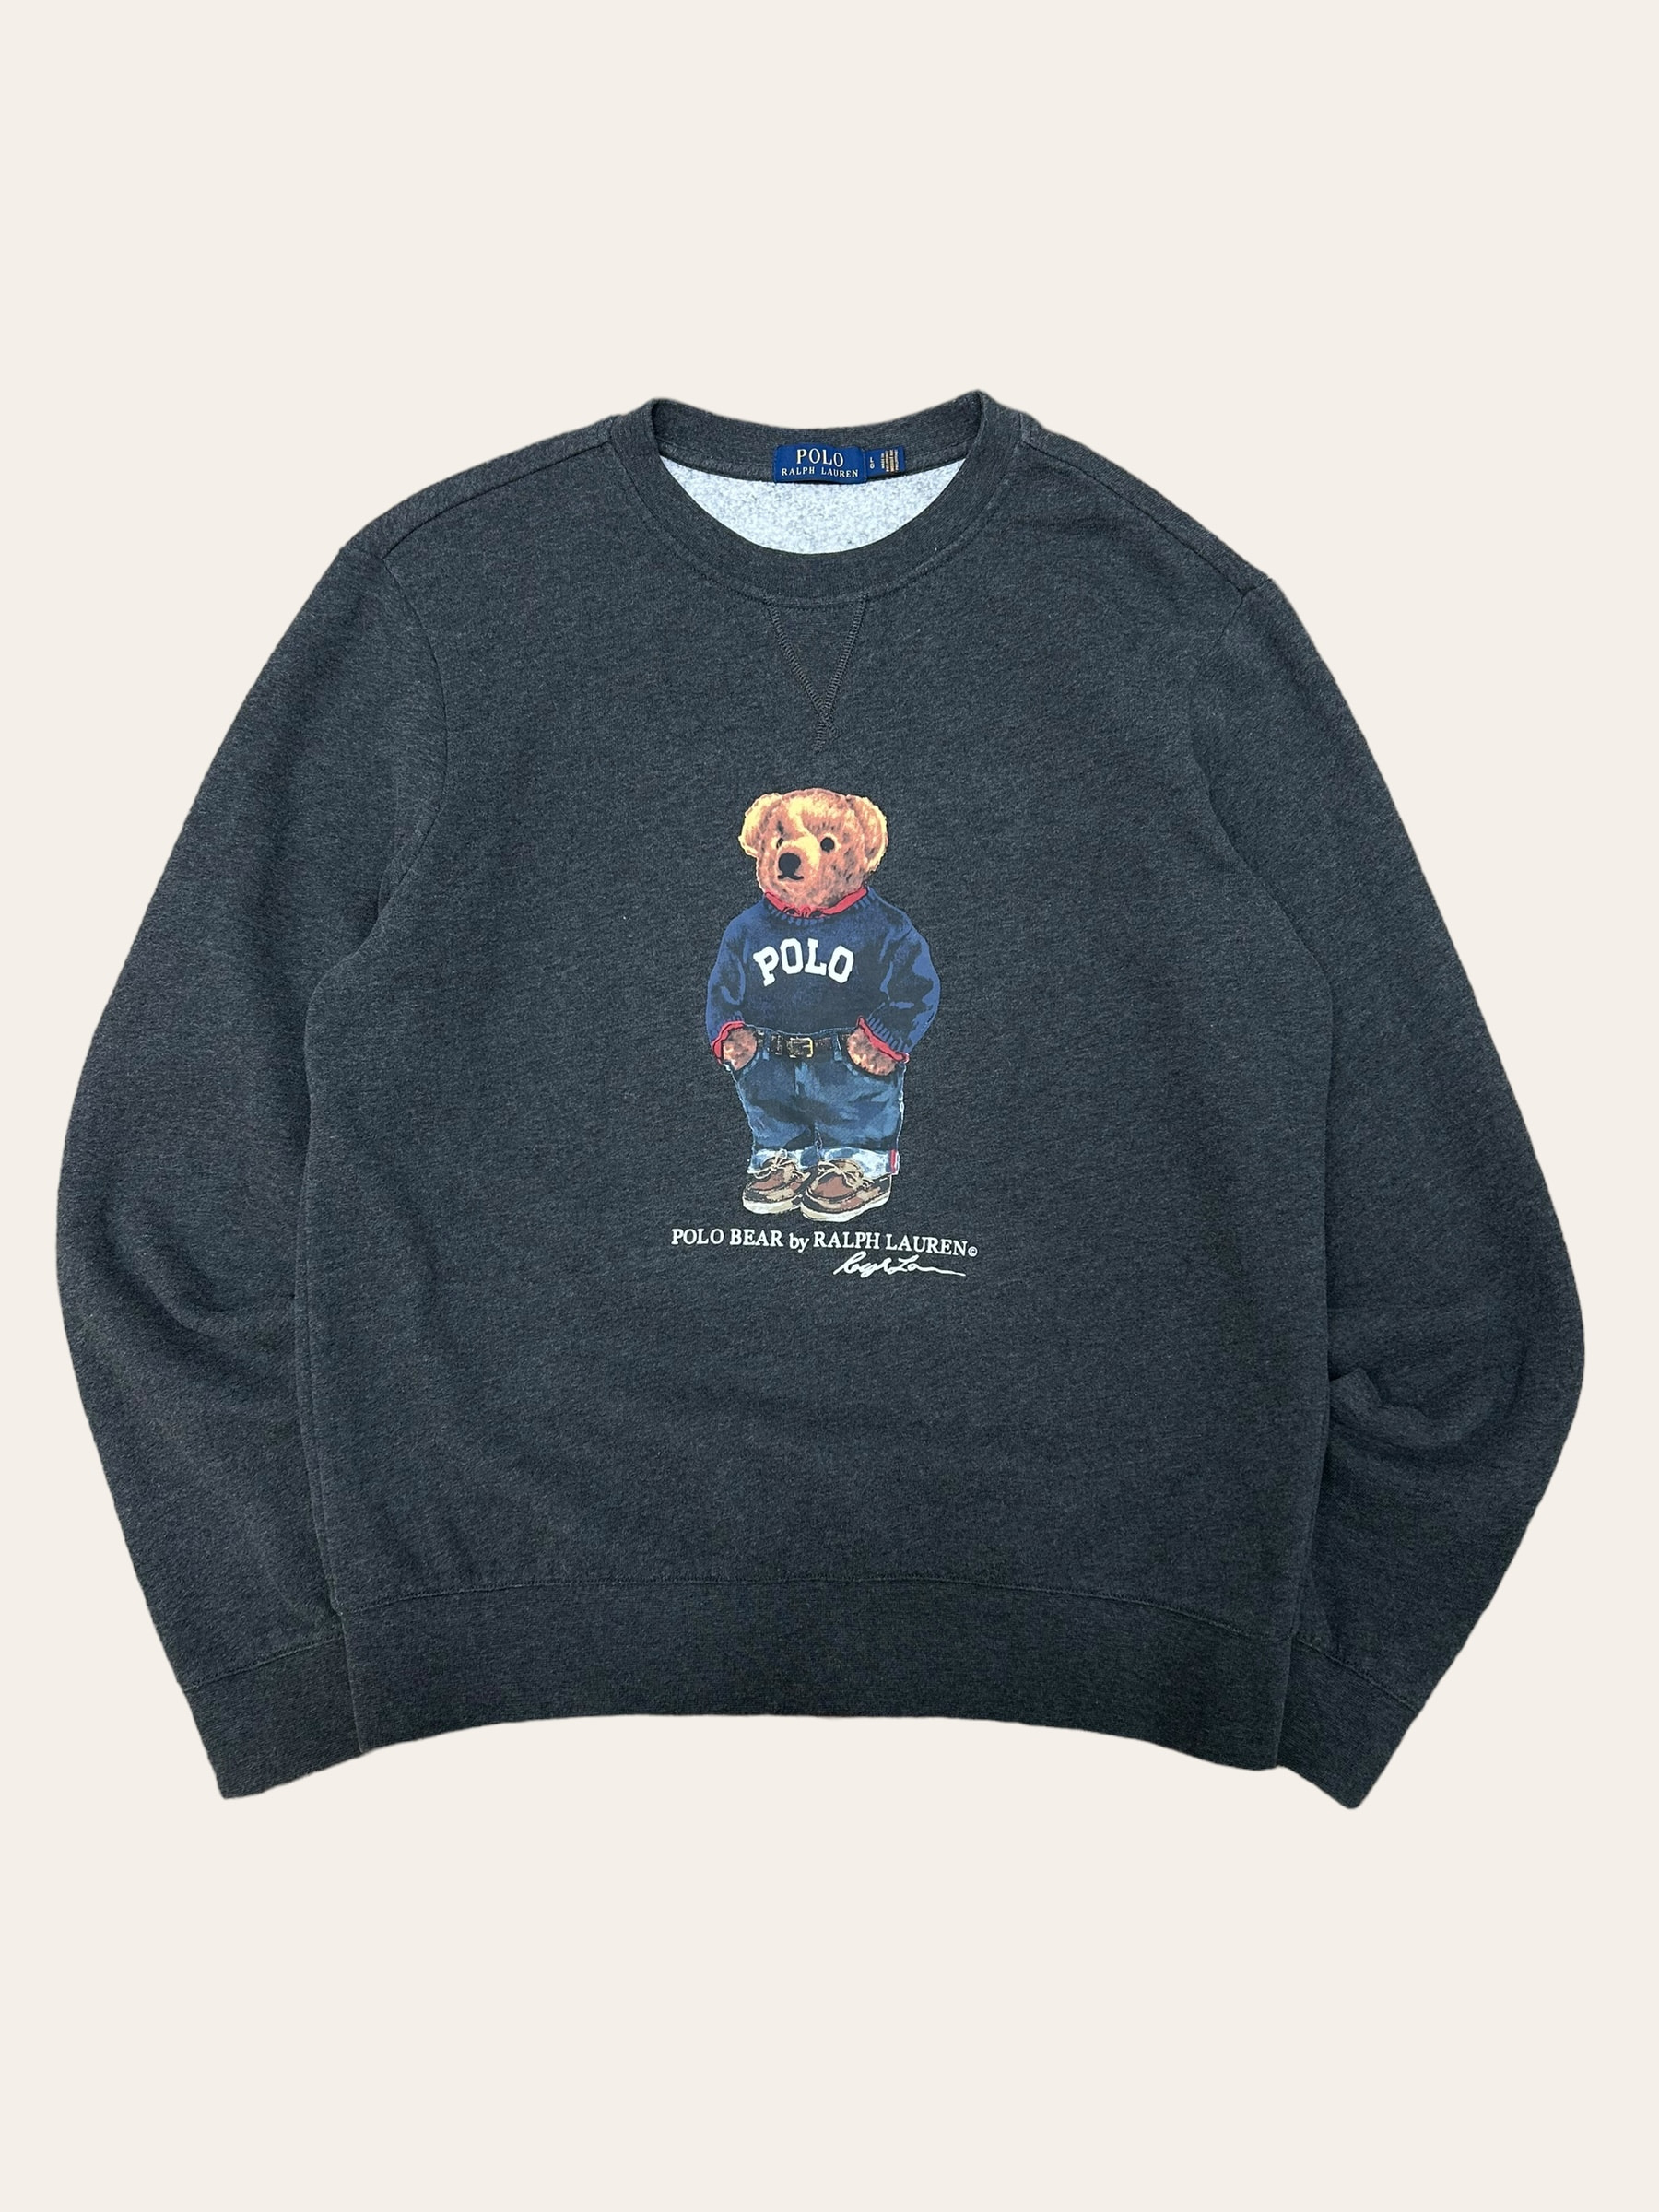 Polo ralph lauren dark gray bear printing sweatshirt L